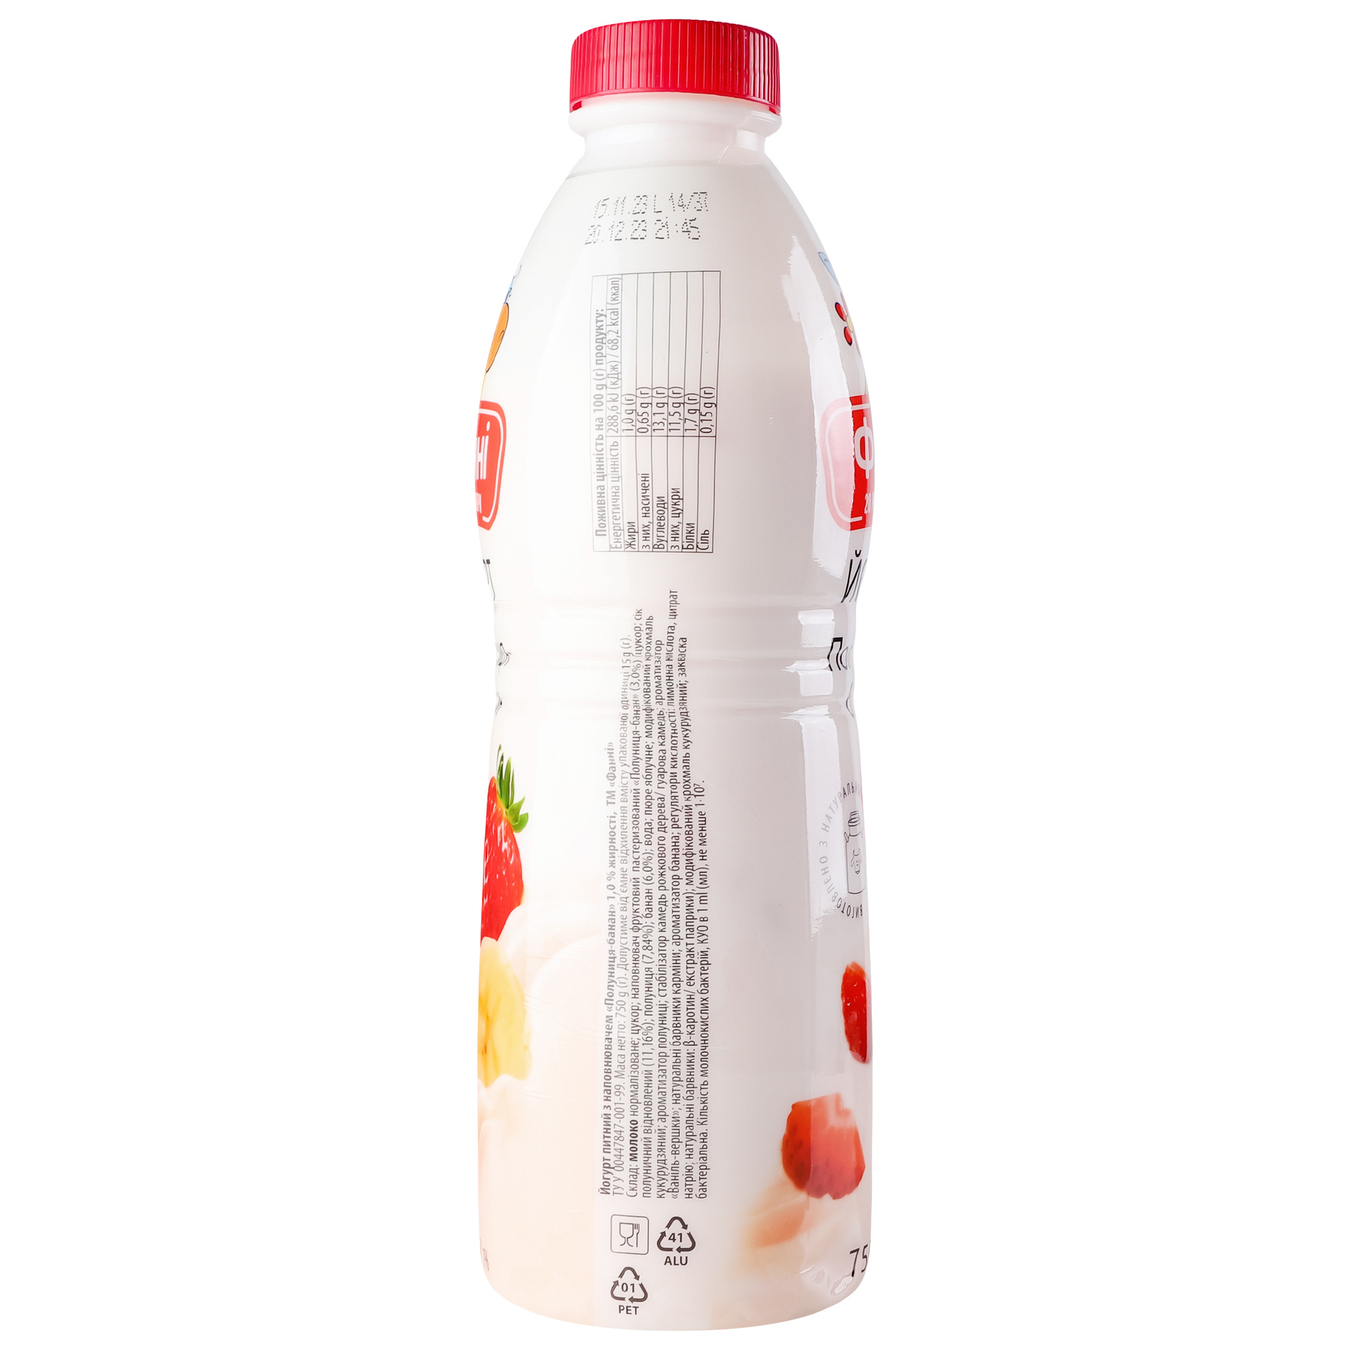 Fanny yogurt with strawberry-banana filling drinking bottle 1% 750g 3